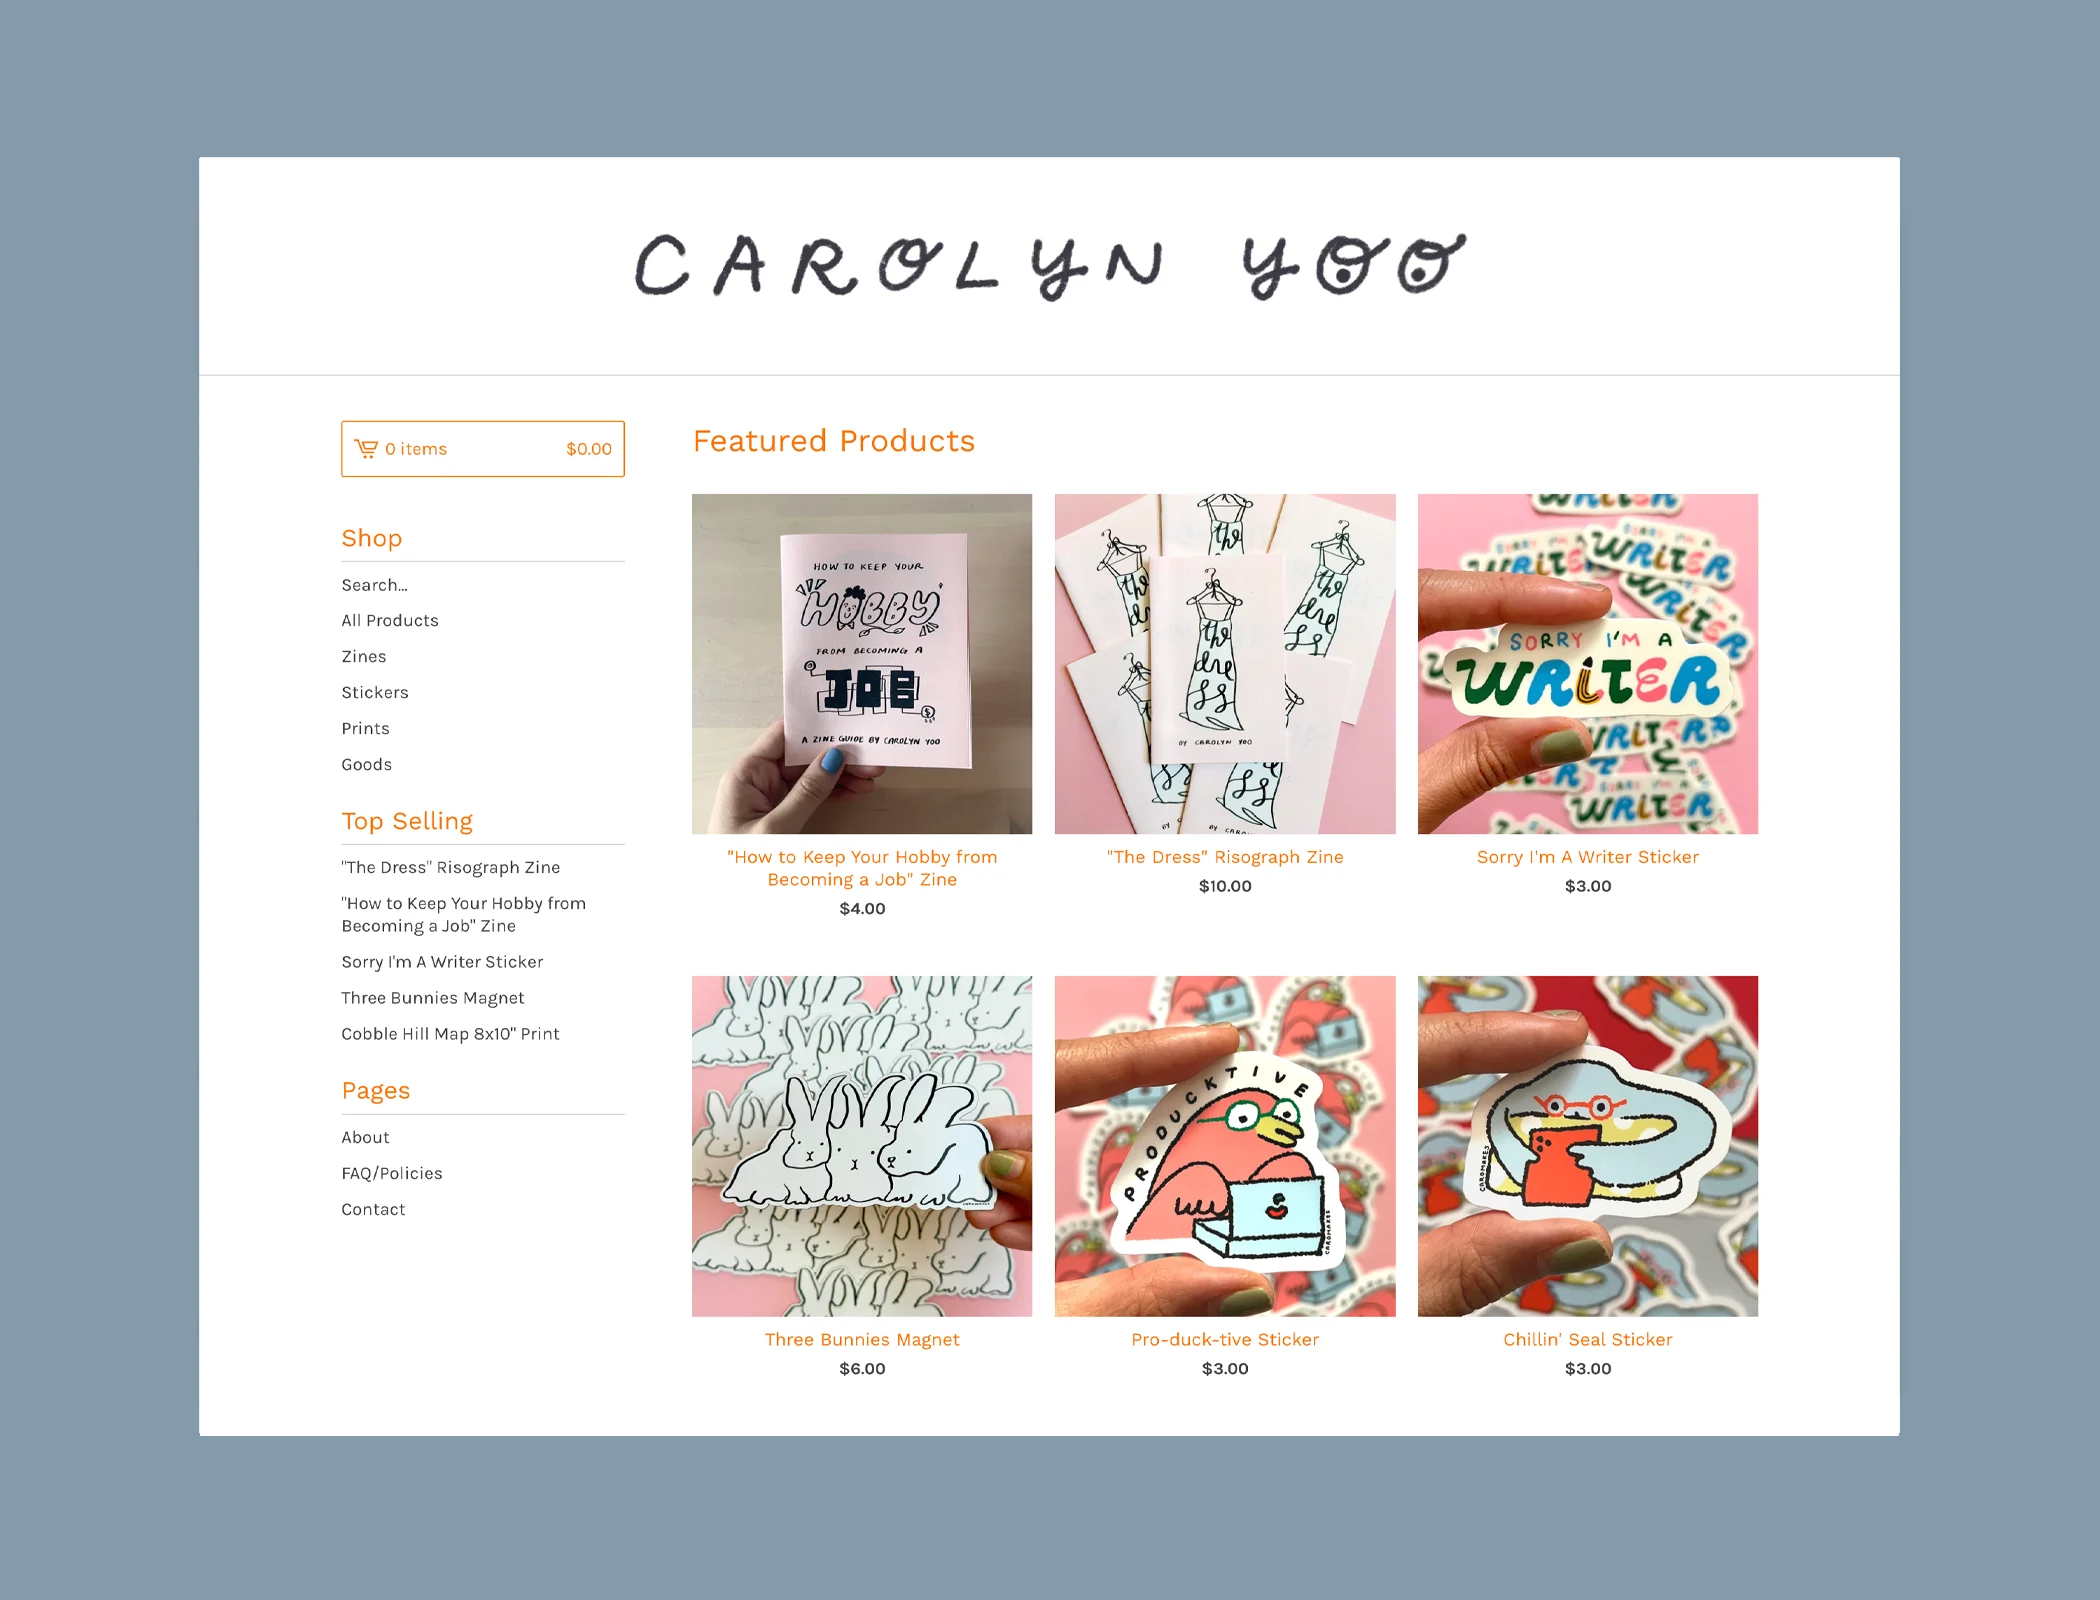 Design of the Store of Carolyn Yoo